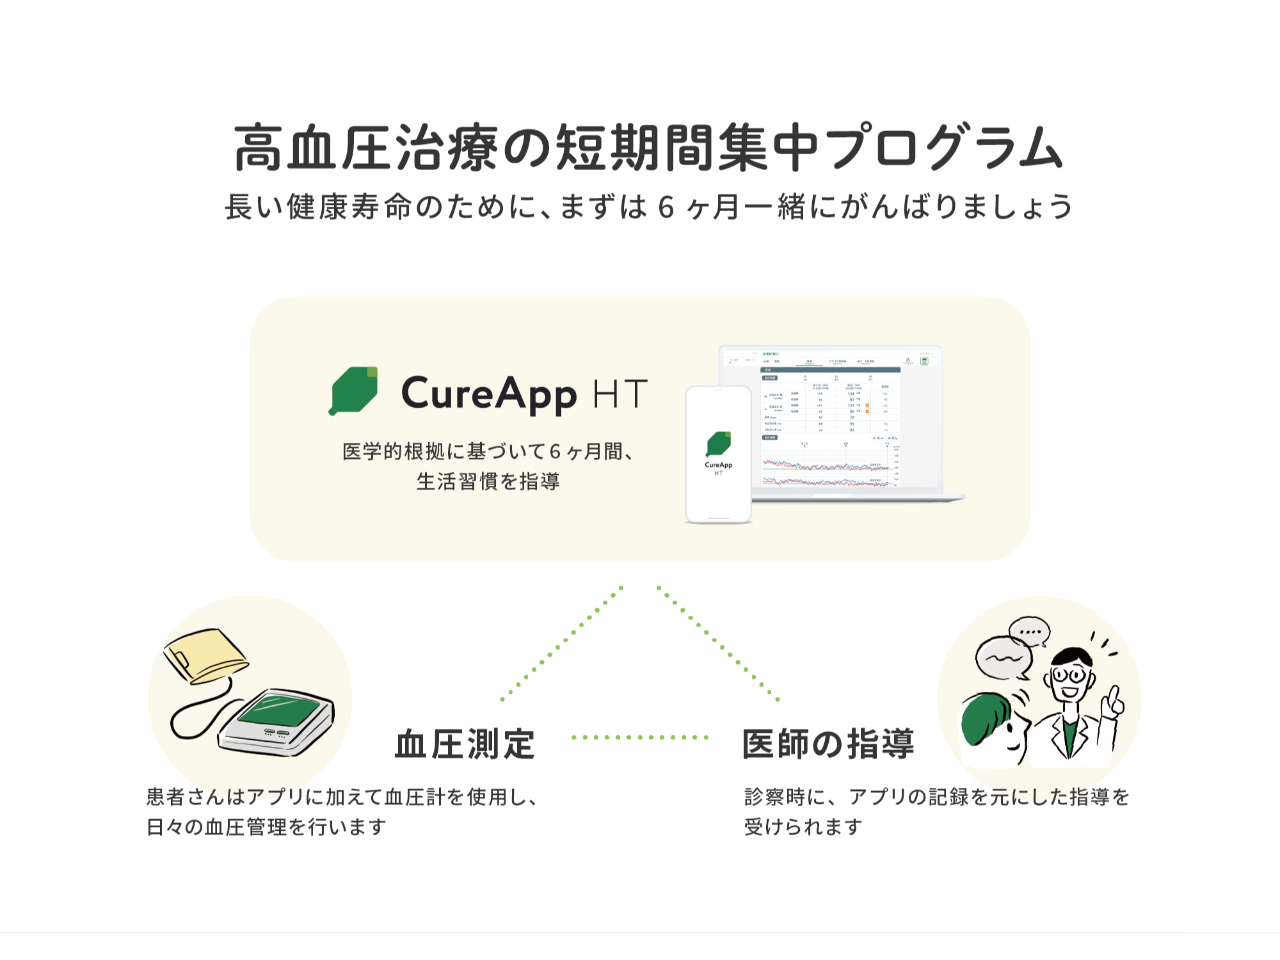 CureApp、「CureApp HT 高血圧治療補助アプリ」が保険適用へ - CNET Japan